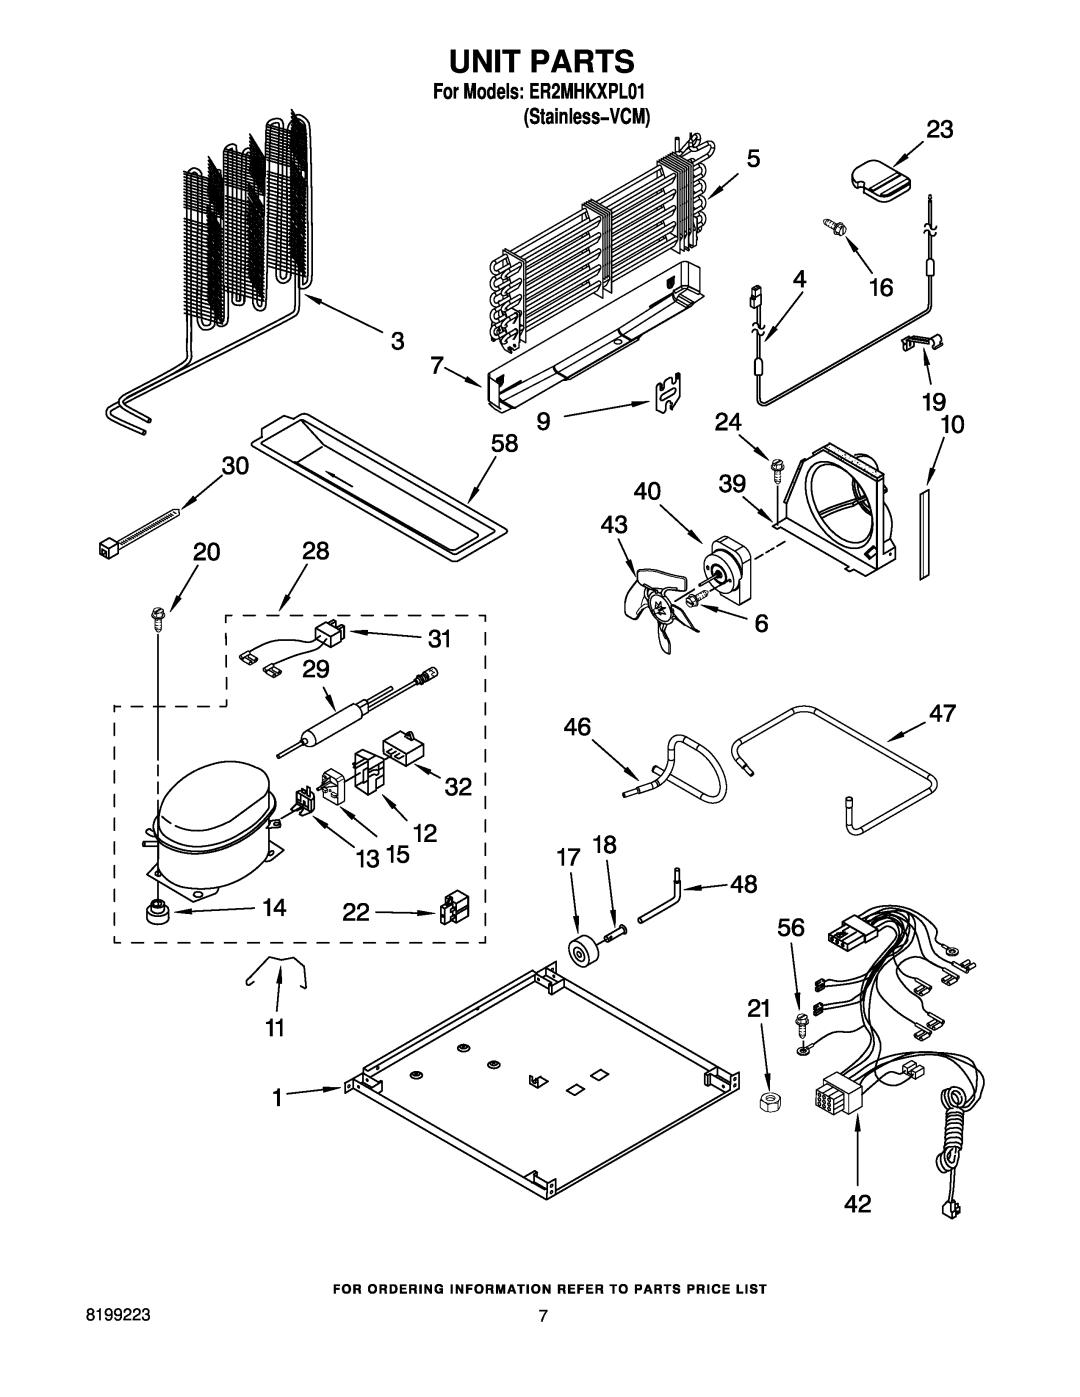 Whirlpool manual Unit Parts, For Models ER2MHKXPL01 Stainless−VCM 